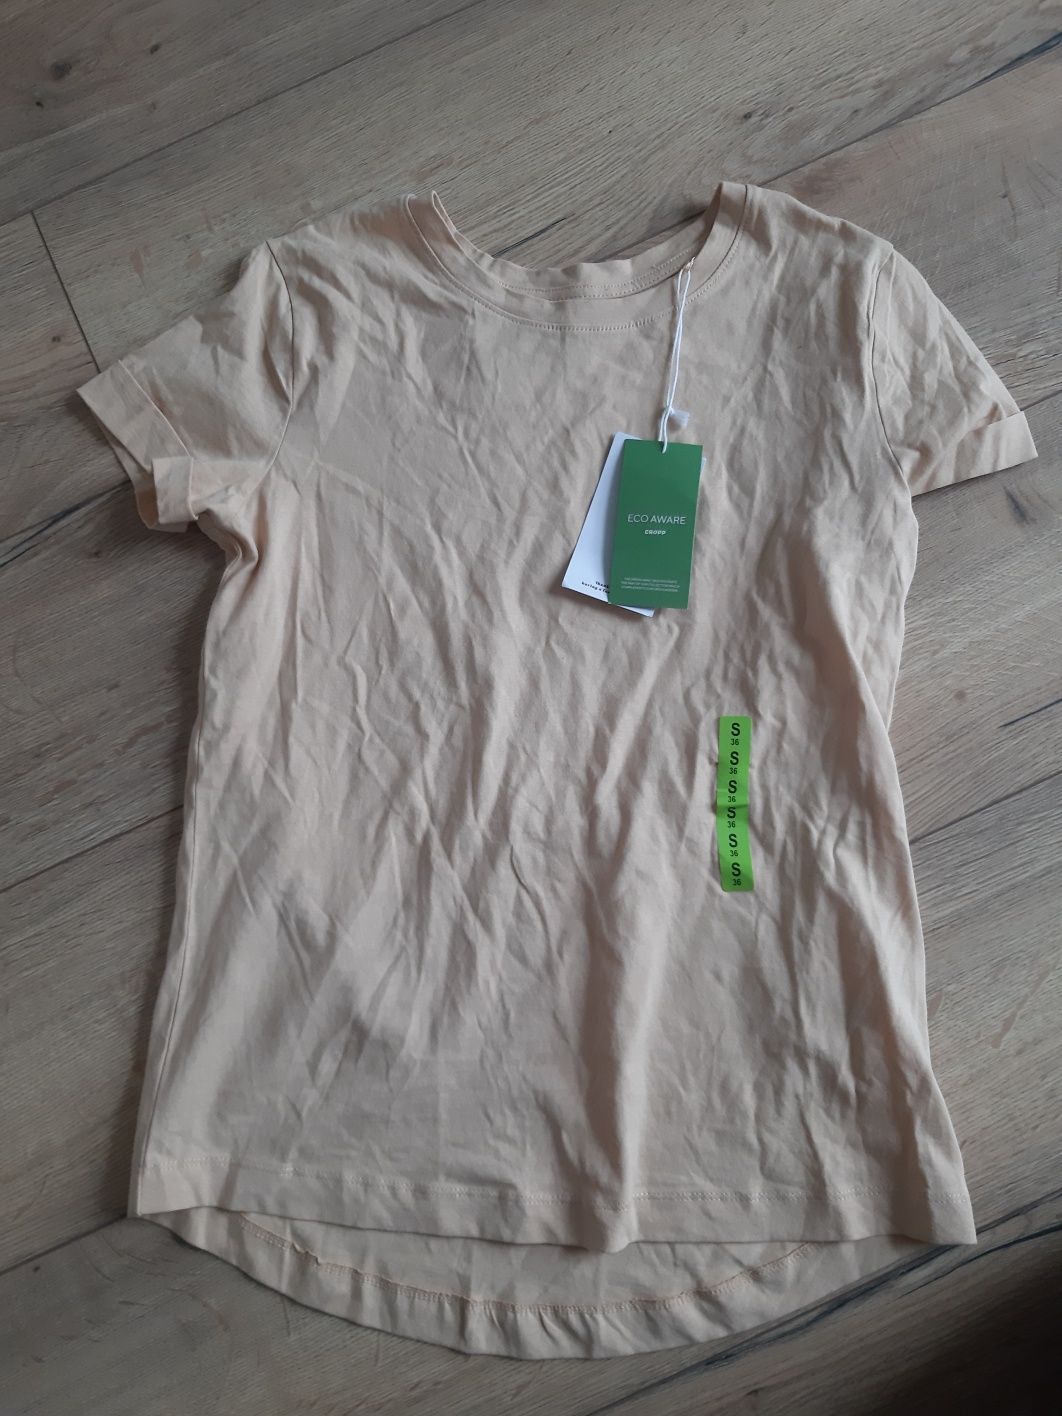 Cropp t-shirt koszulka bez nude bezowa brzoskwiniowa NOWA S